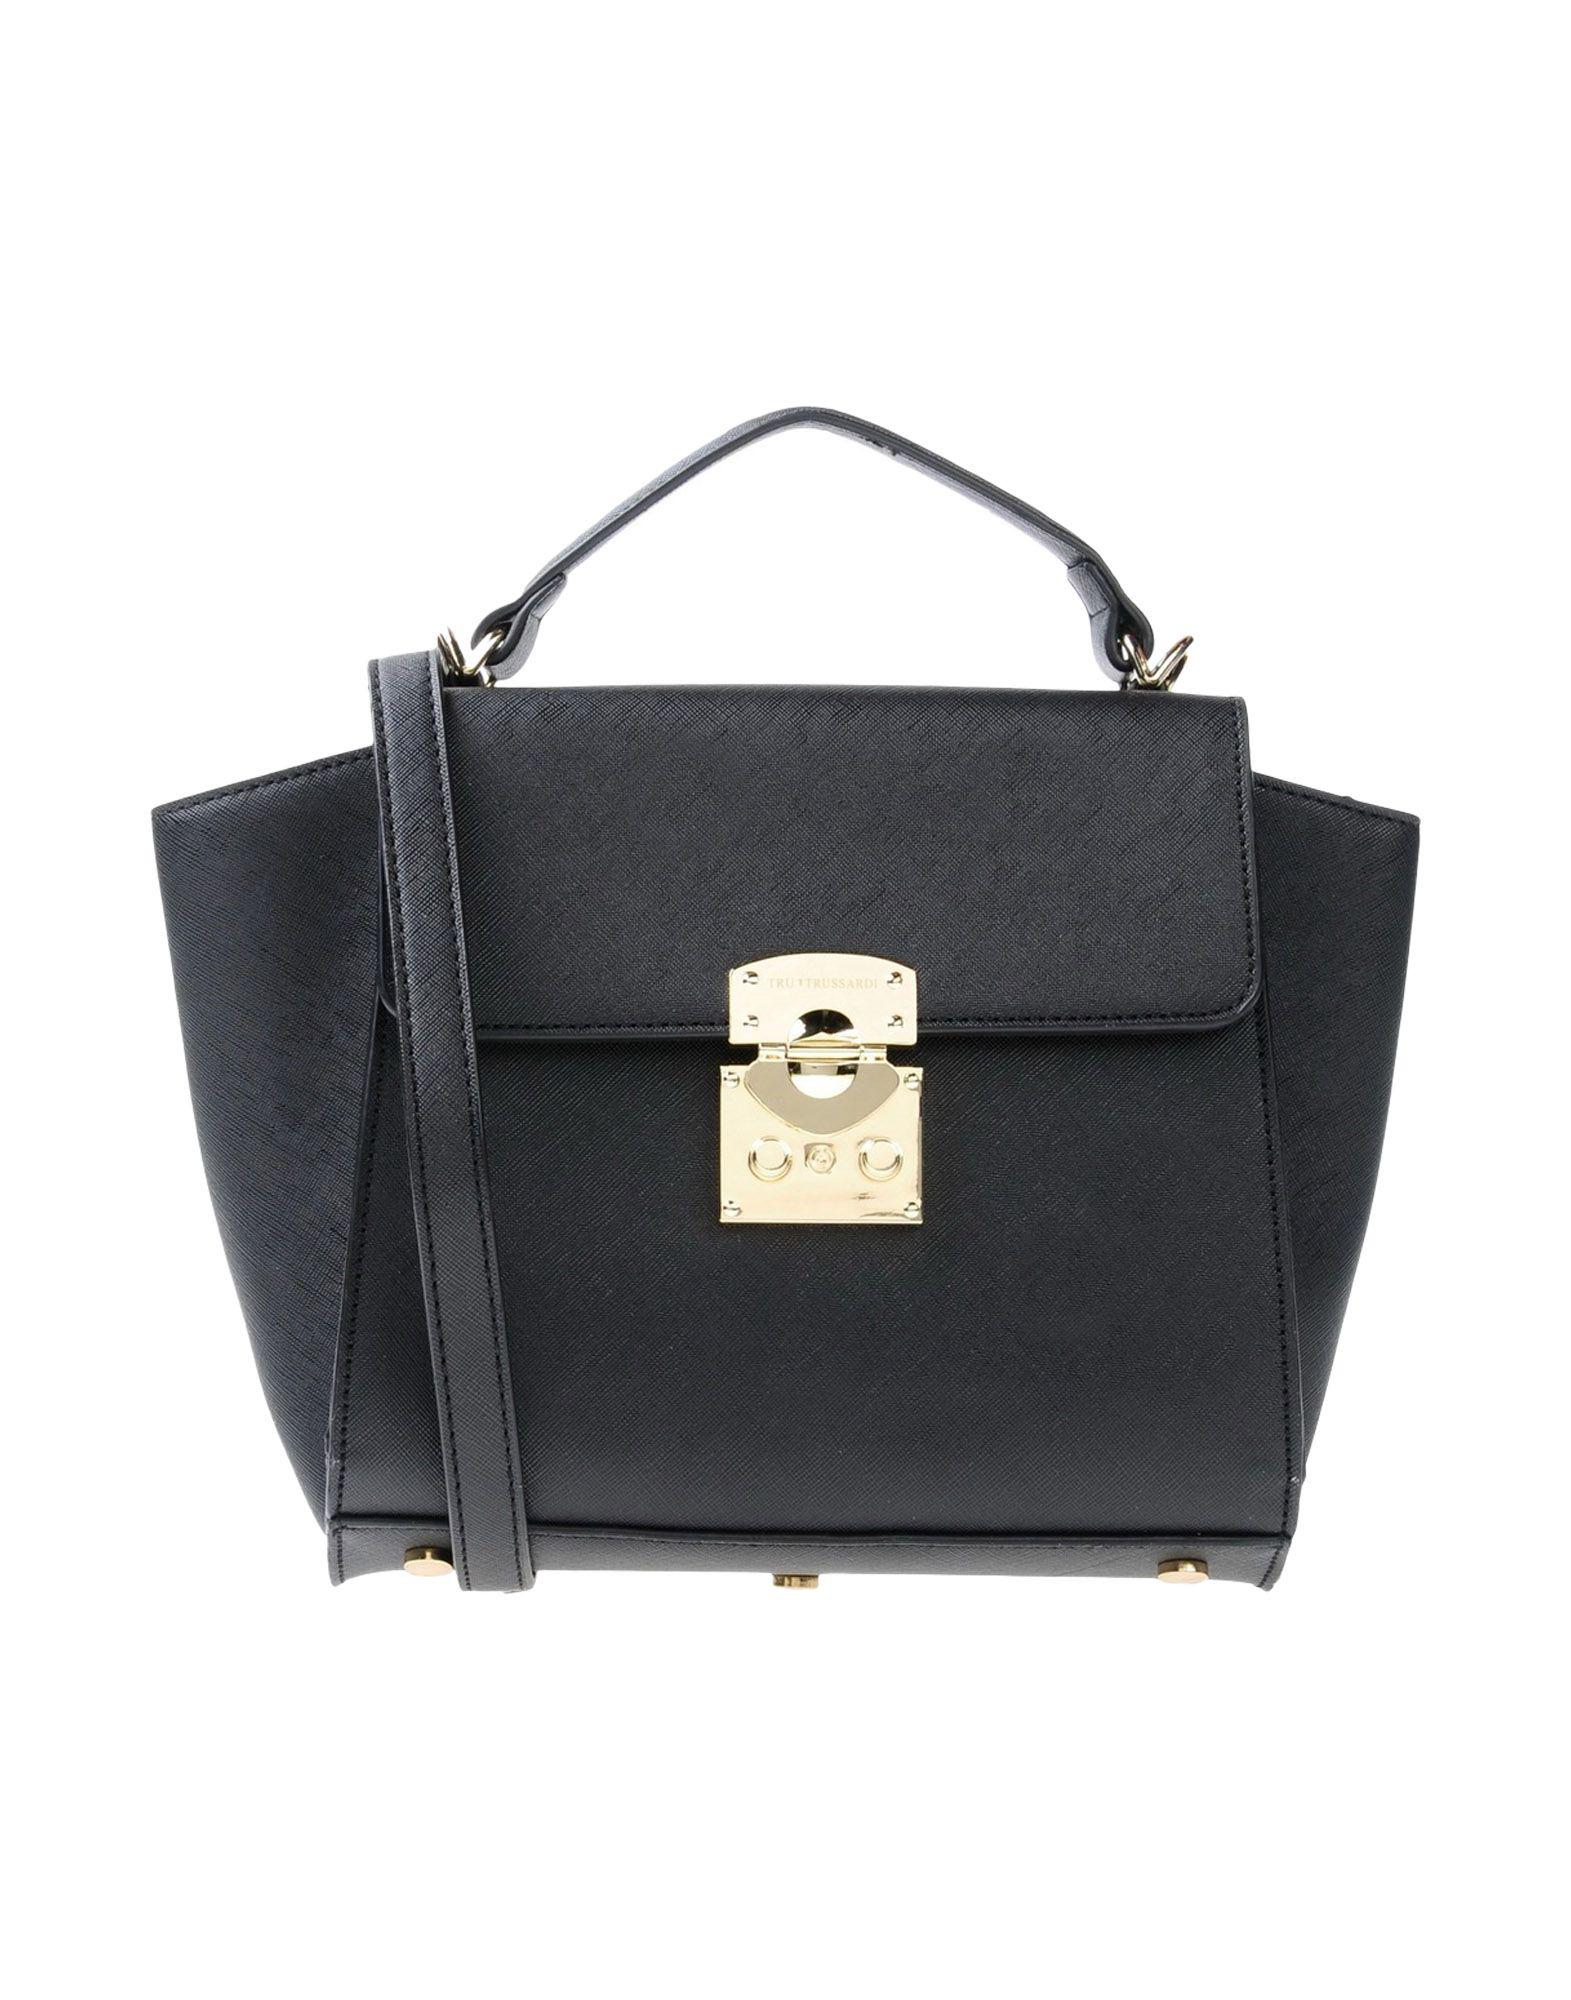 Tru Trussardi Leather Handbag in Black - Lyst